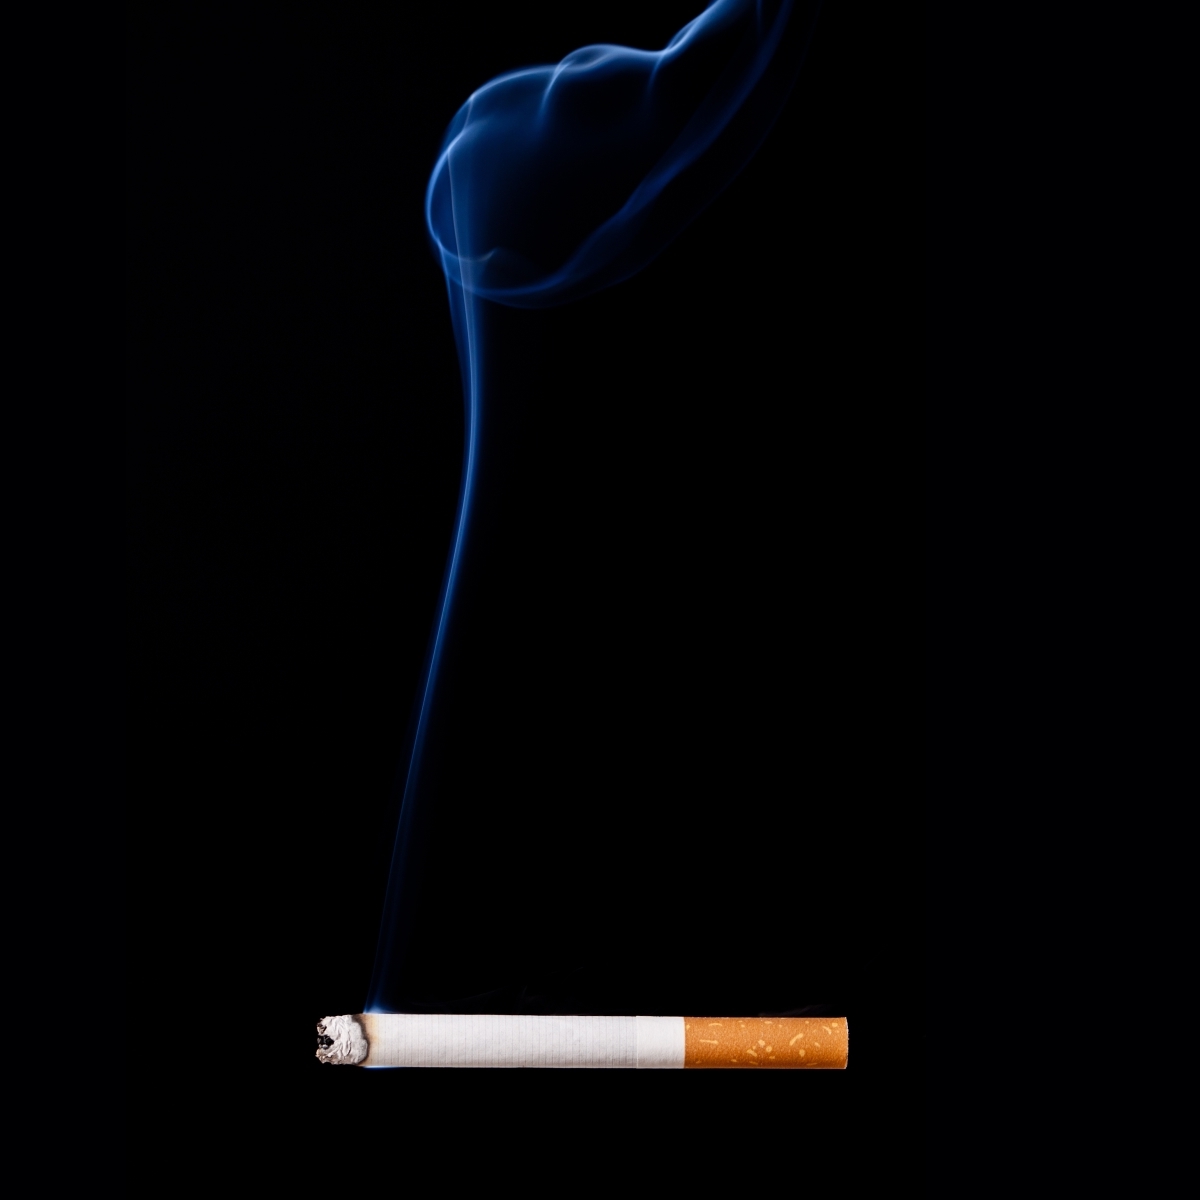 Cigarette smoking